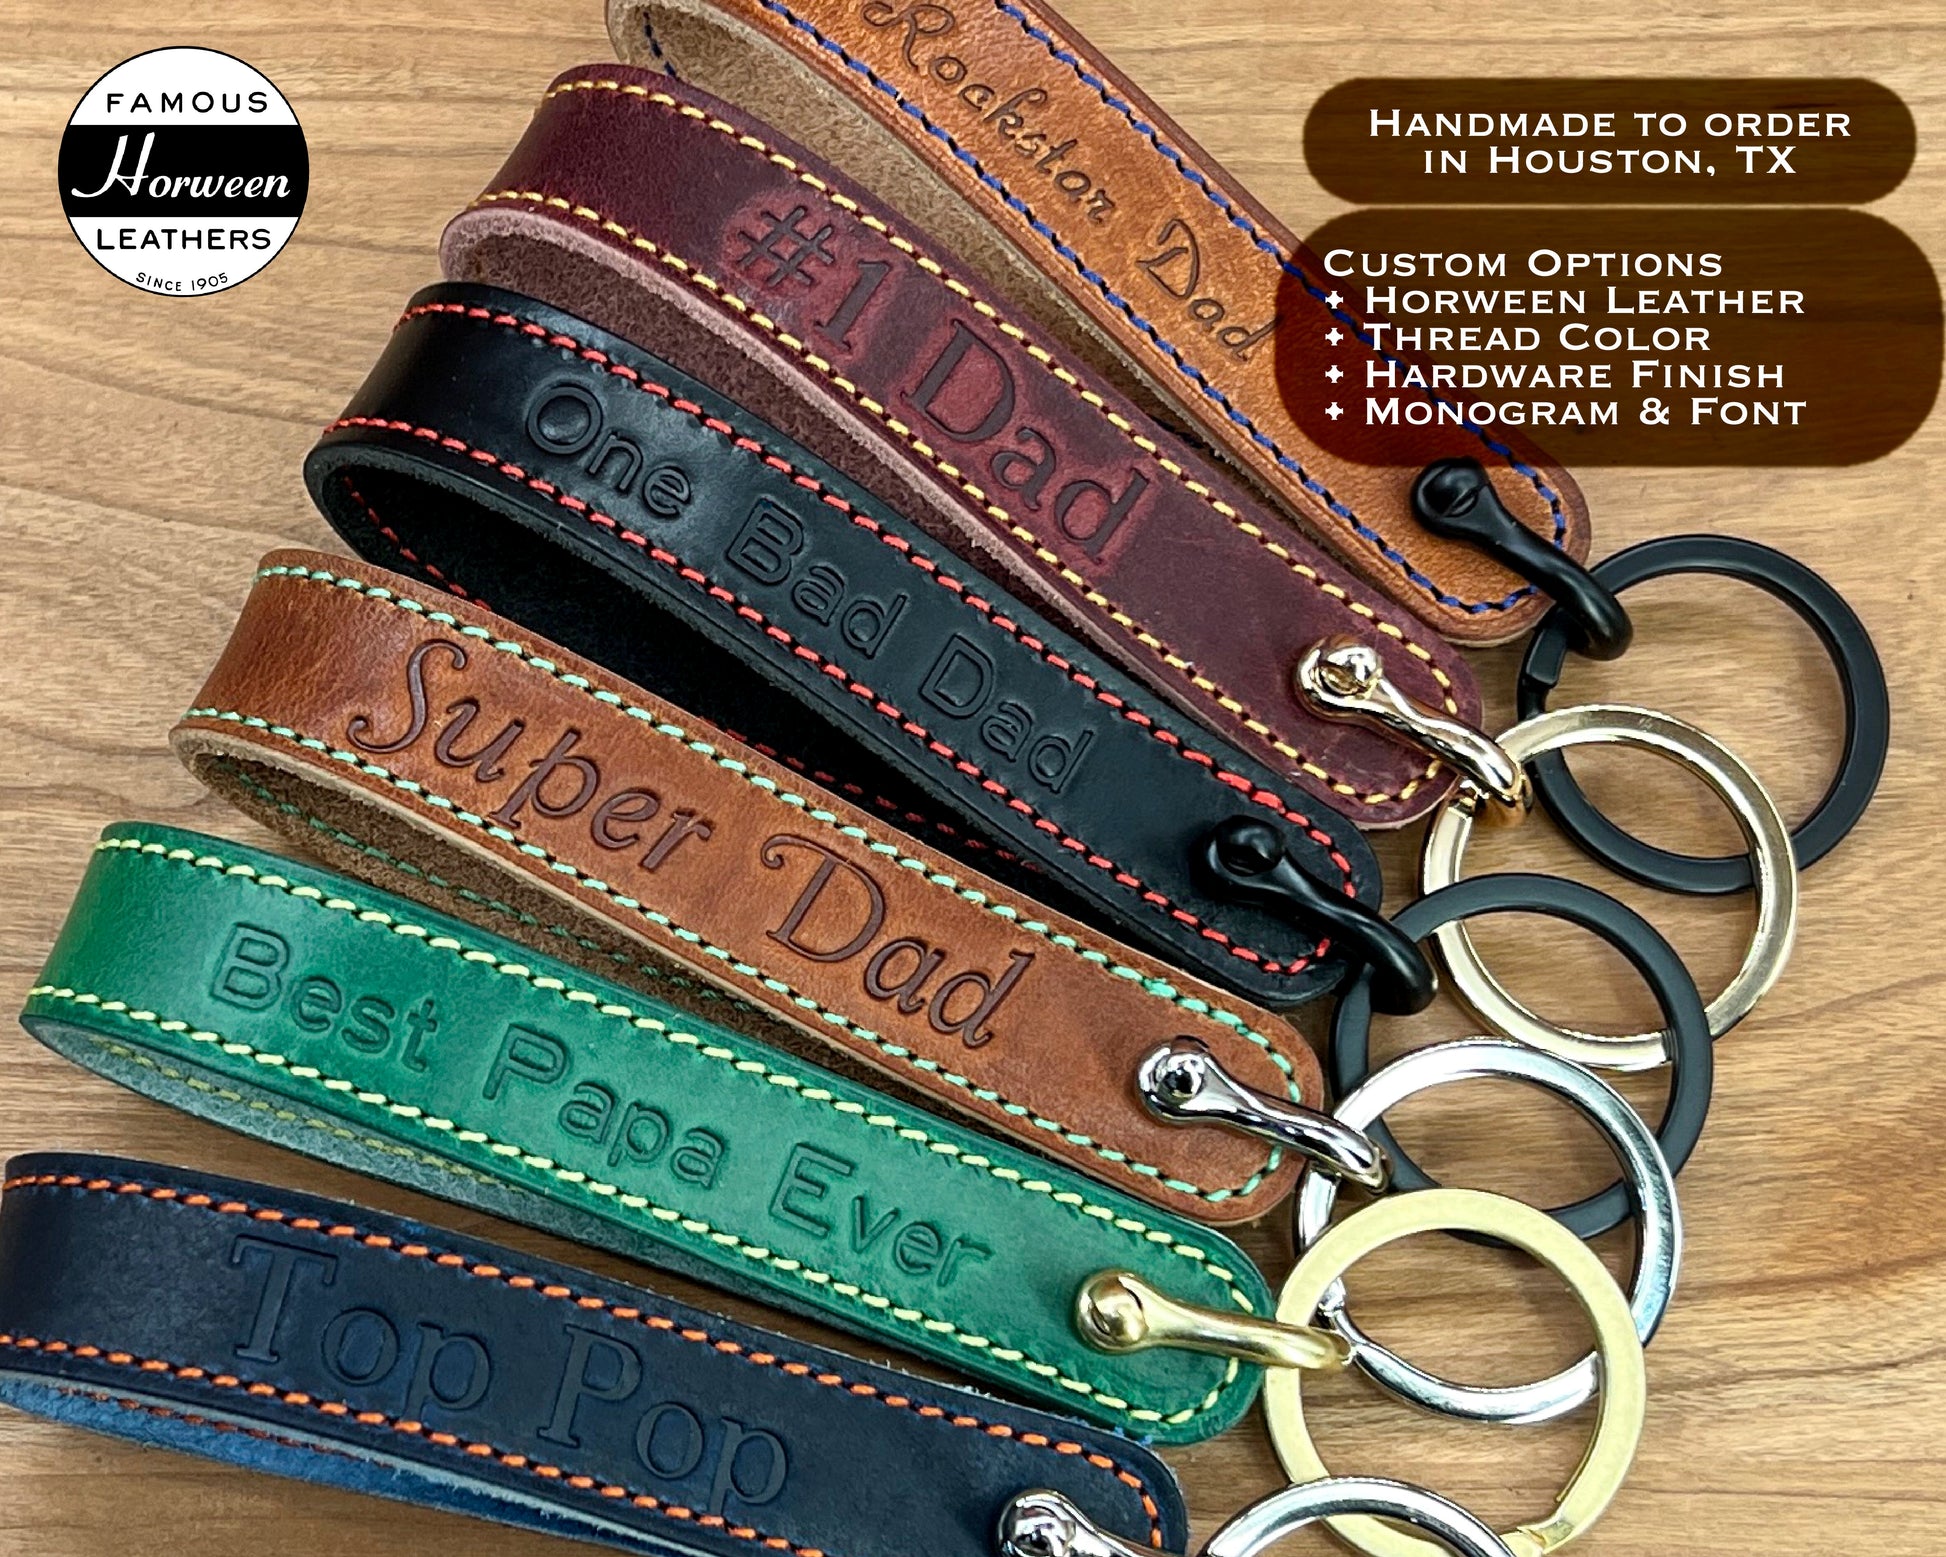 CustomLeatherAndPen Horween Leather Belt Loop Keychain